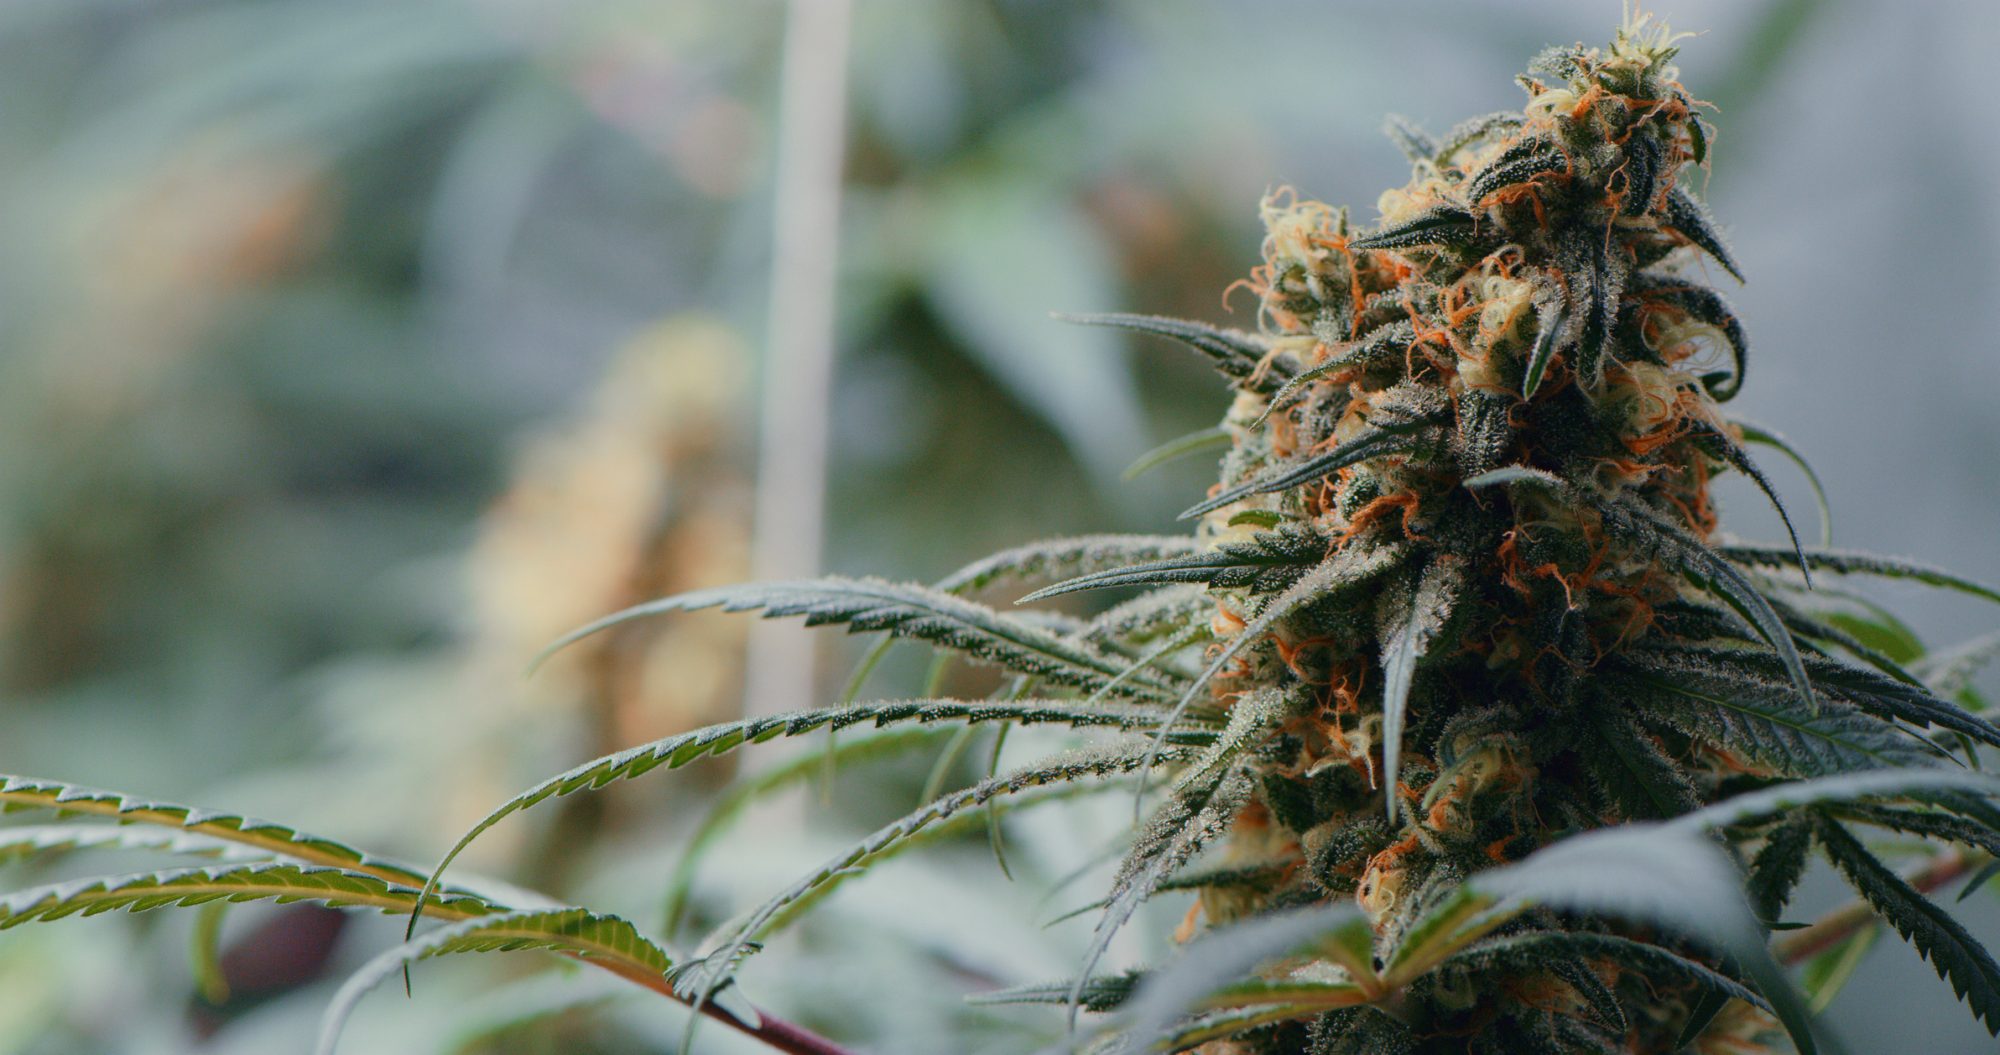 Shot of marijuana growing inside of a grow room